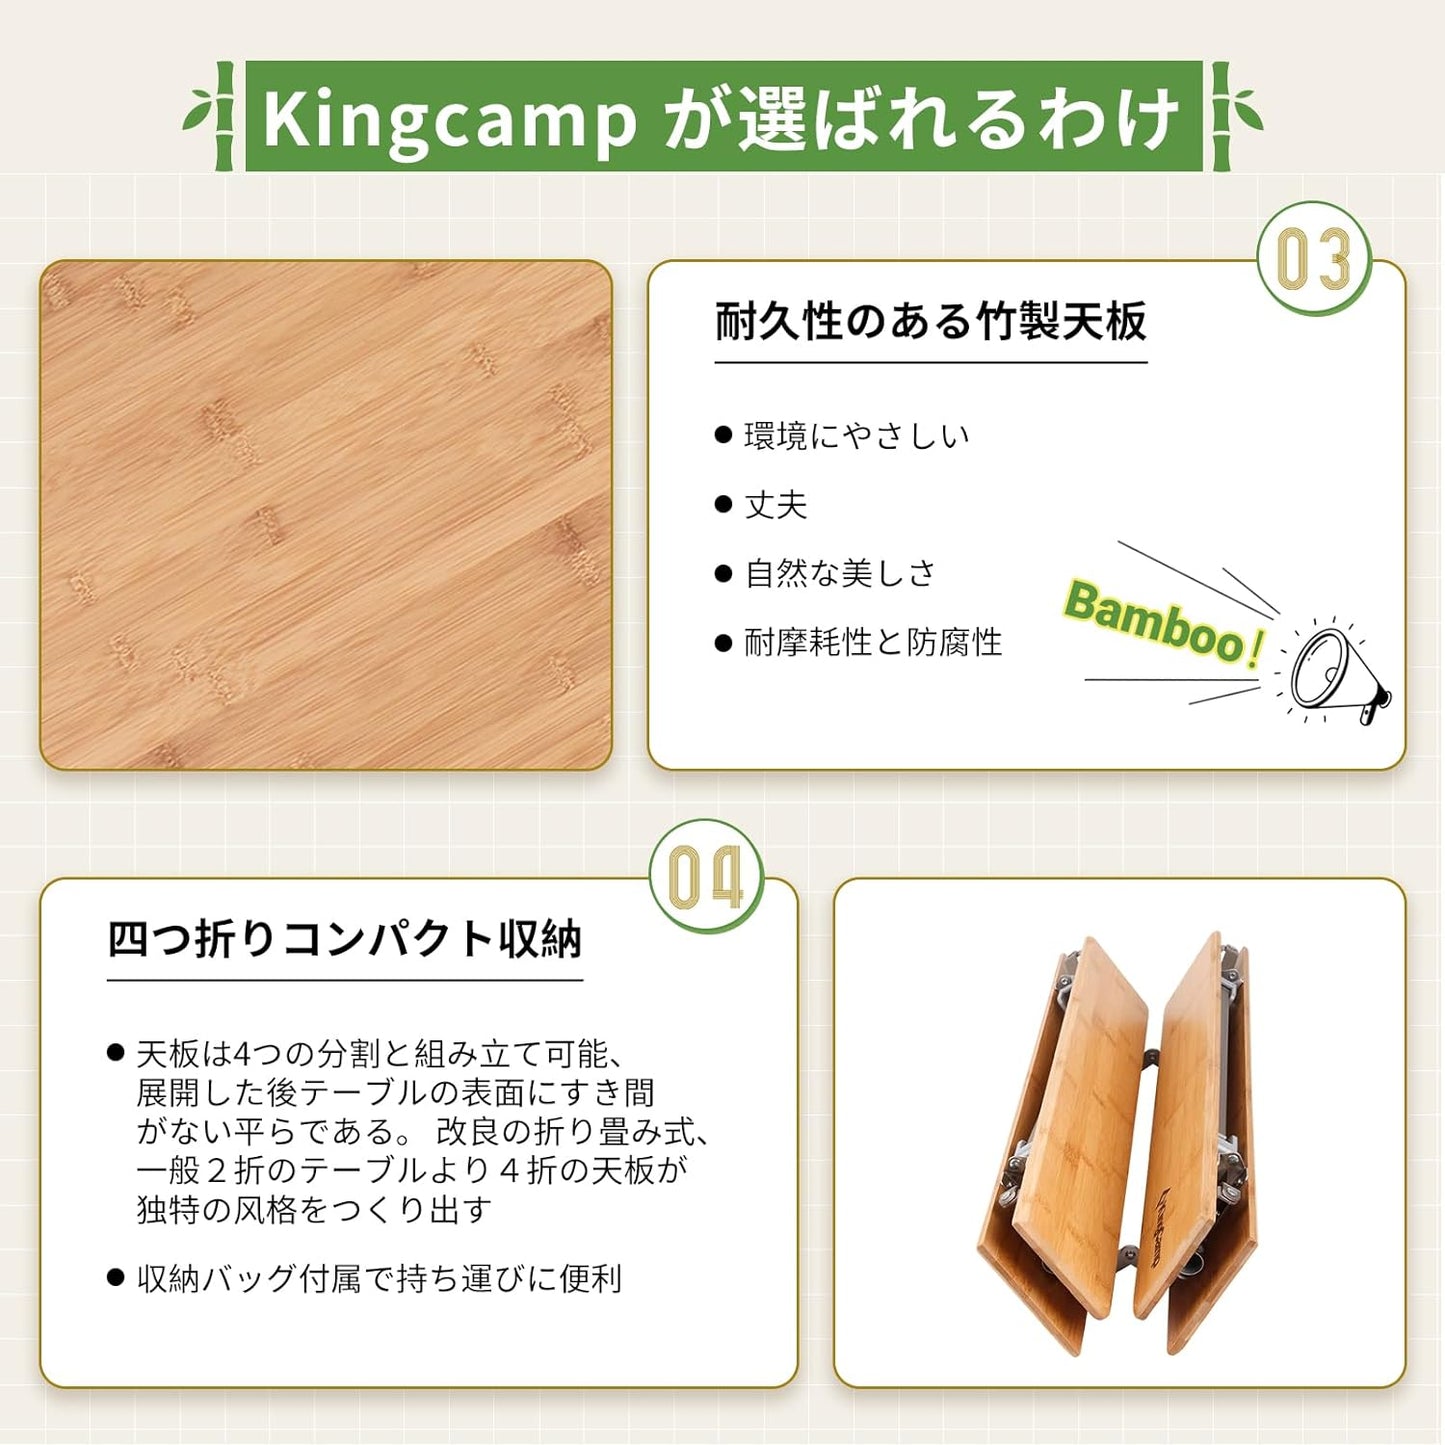 KingCamp 竹アウトドア調節可能な折りたたみキャンプテーブル